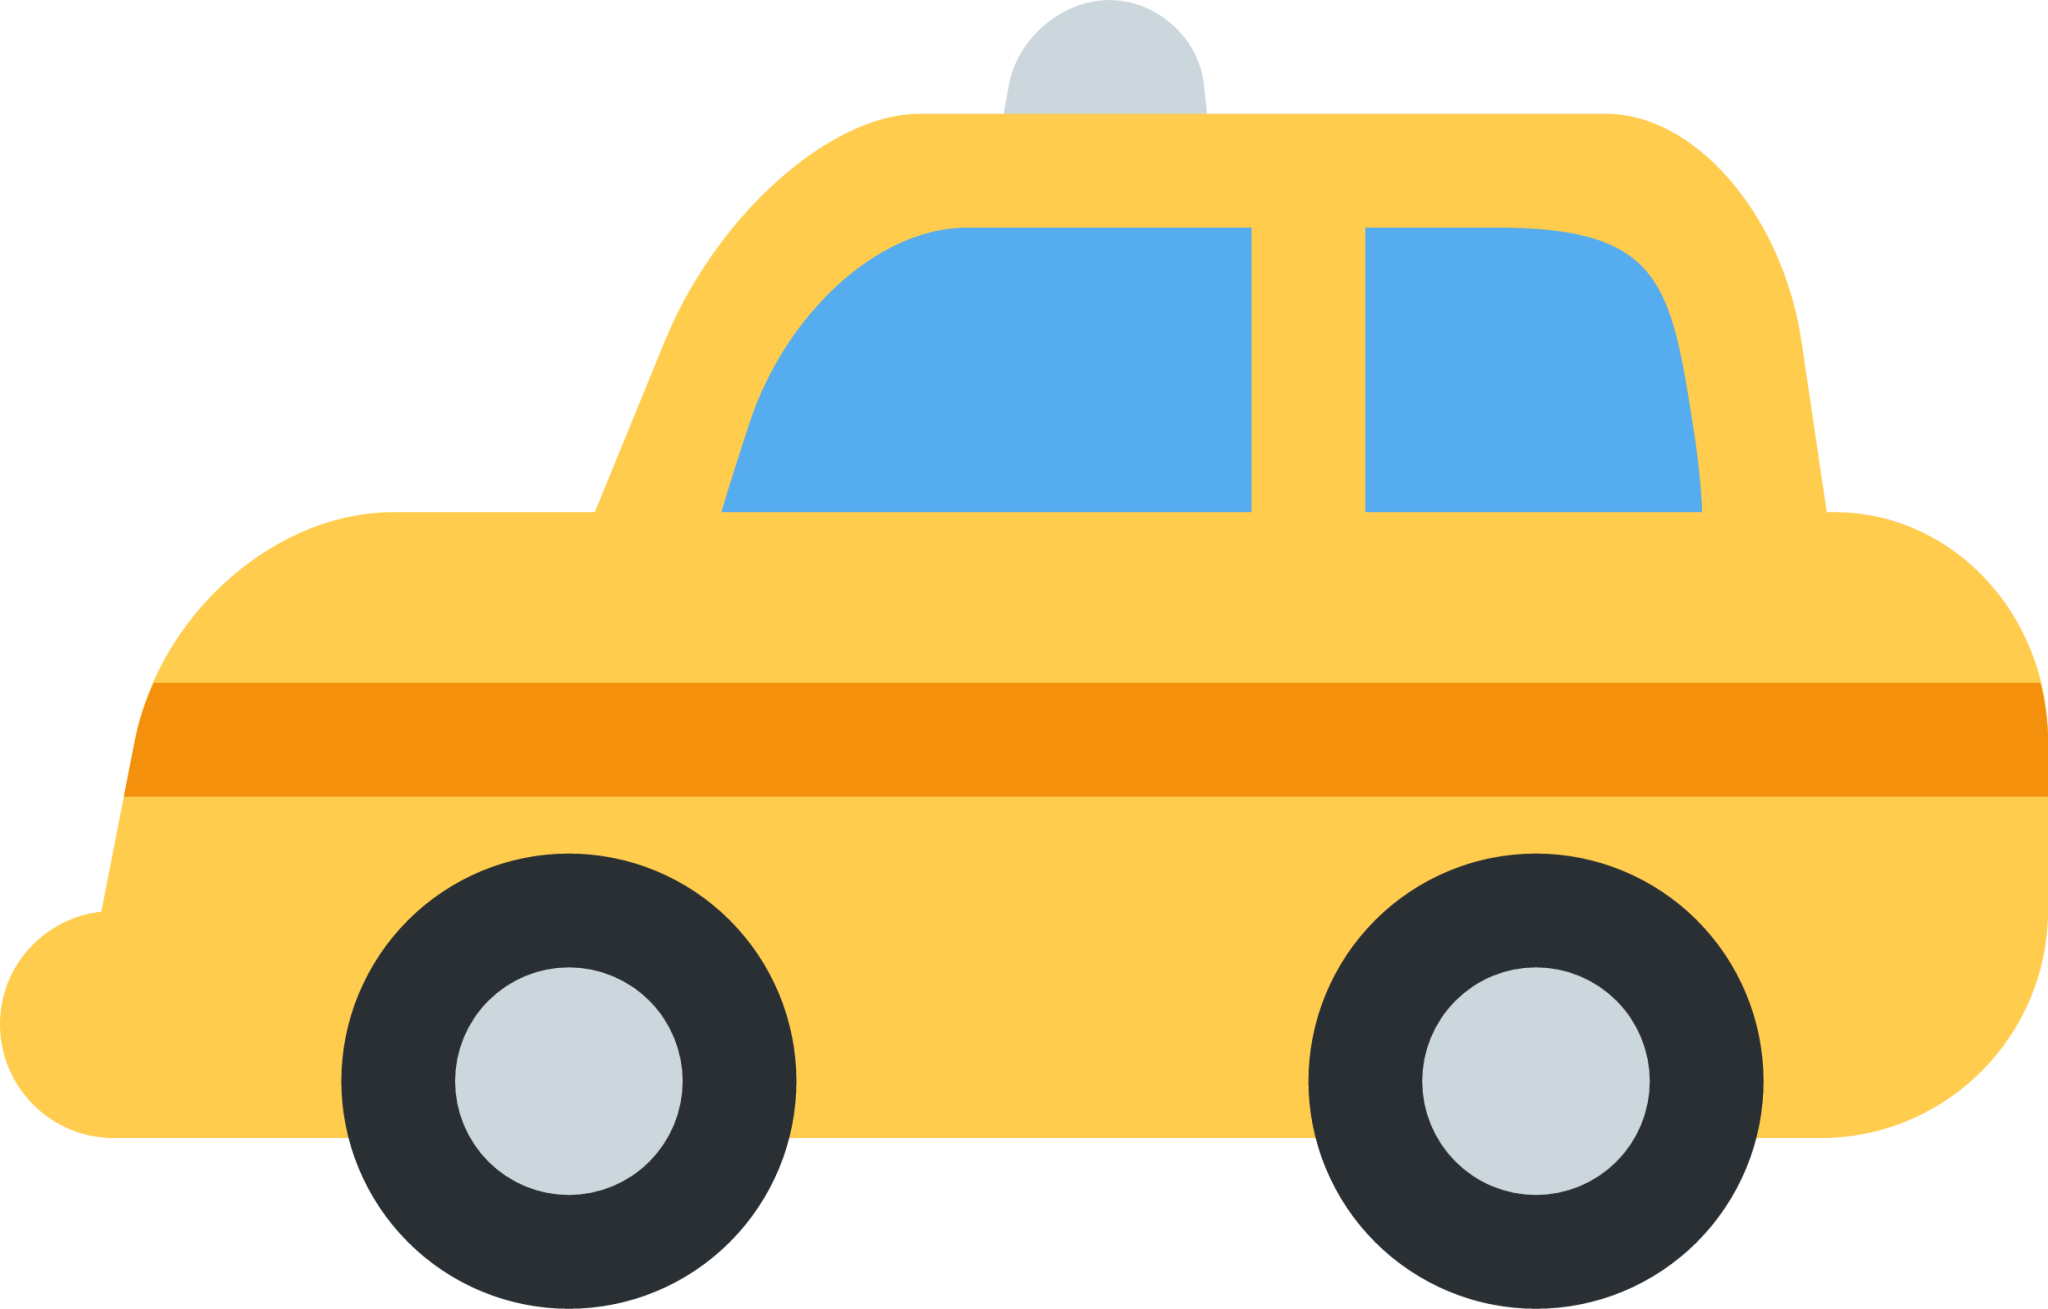 taxi emoji